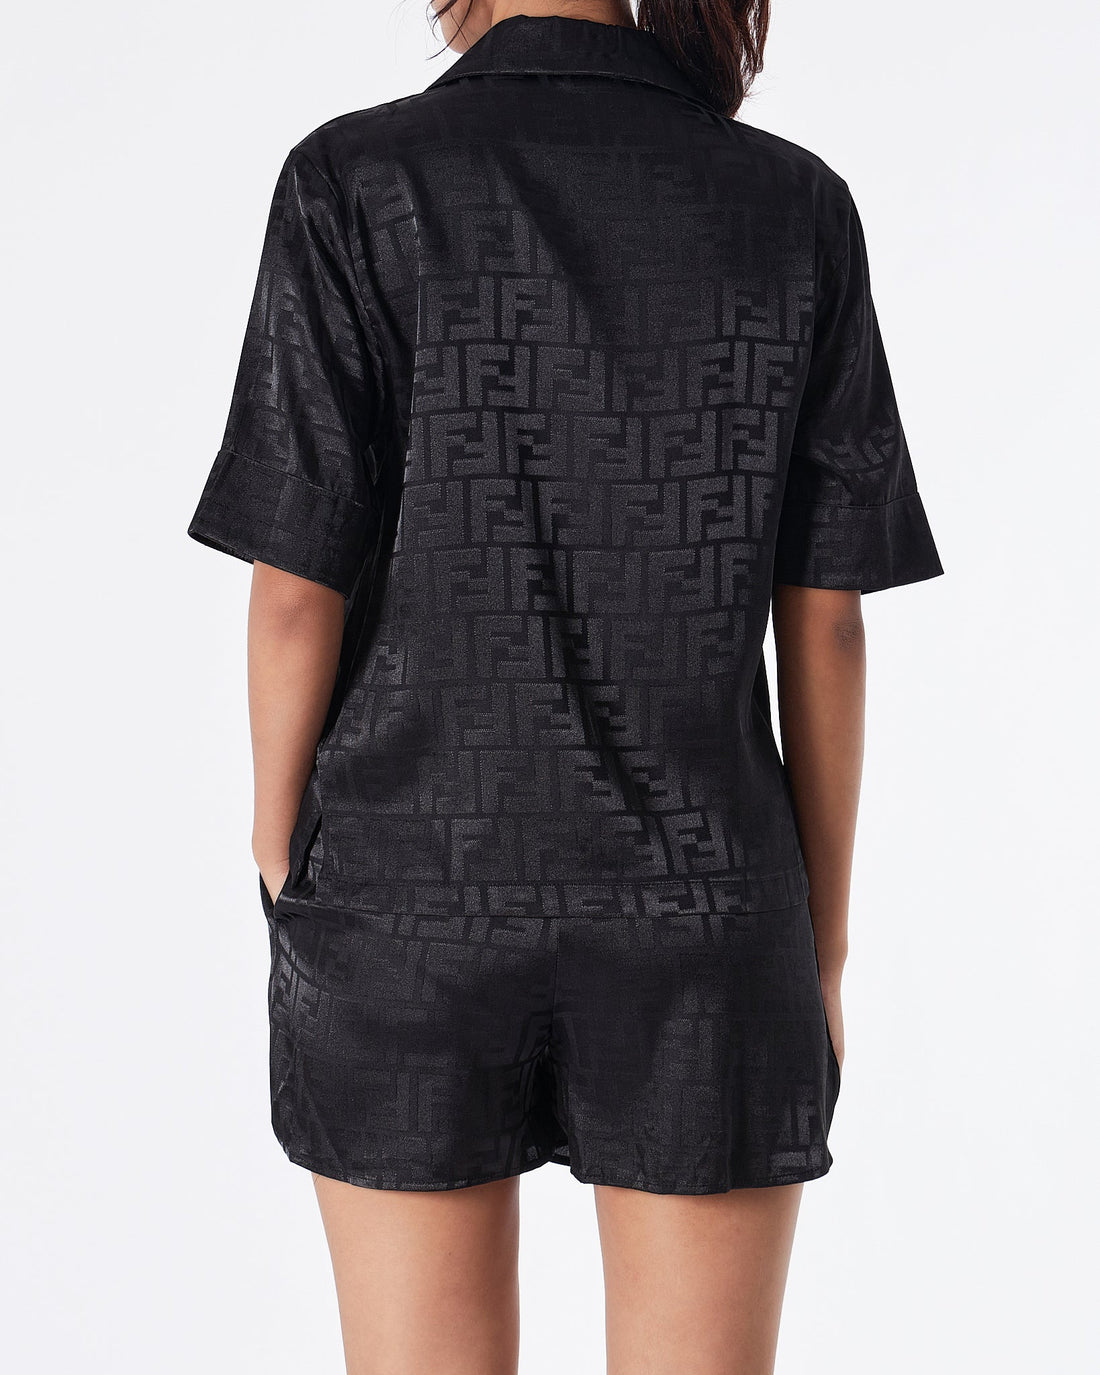 MOI OUTFIT-FF Monogram Lady Black Set Shirt + Short 2pcs 79.90